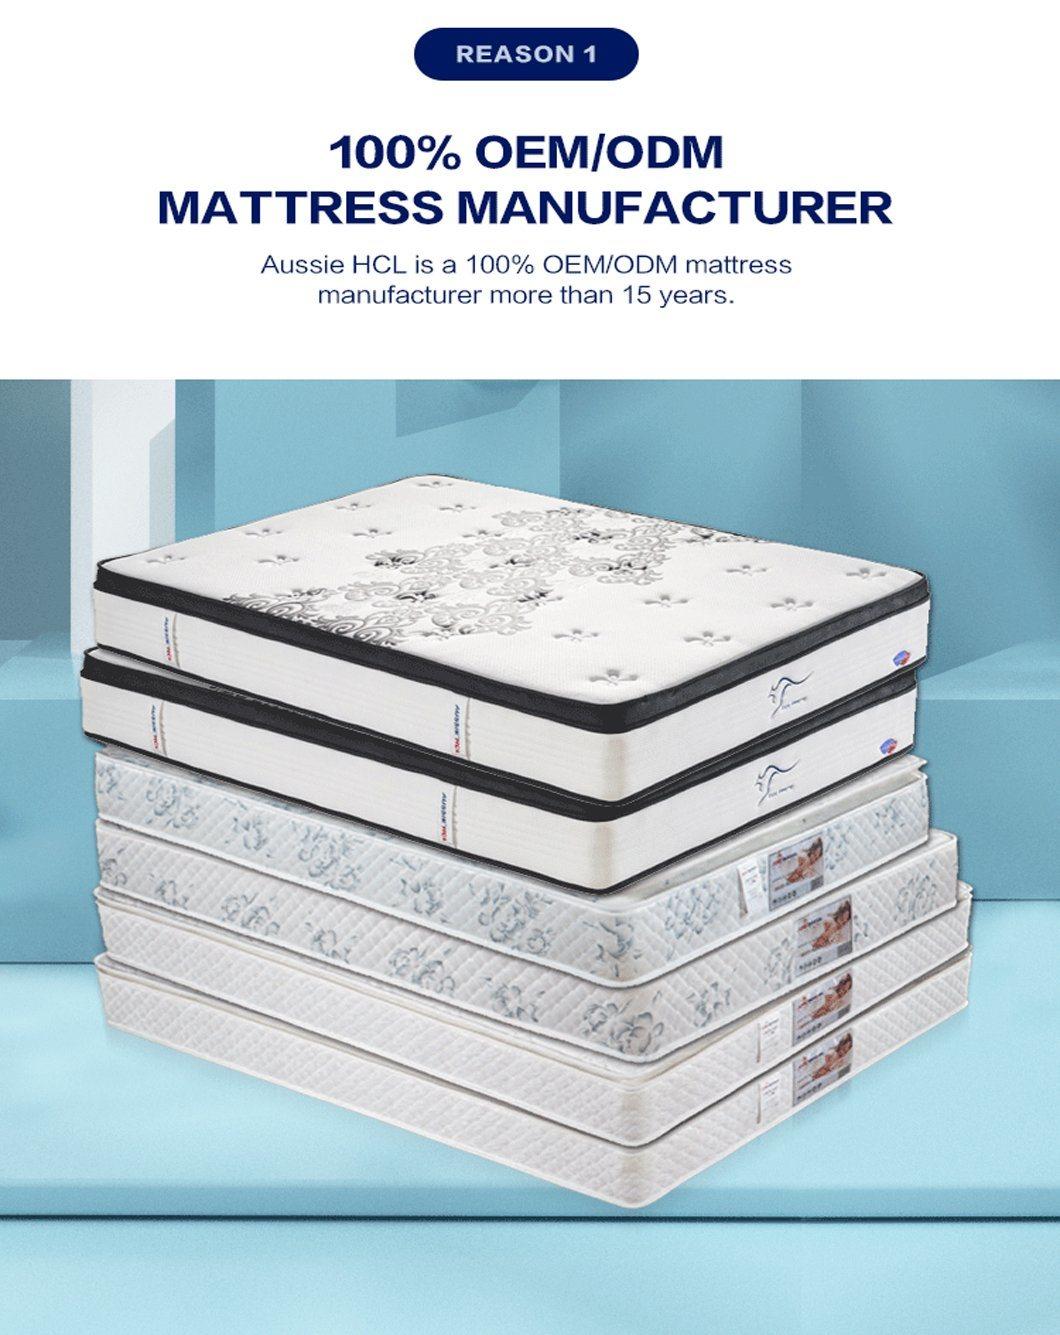 The Best Factory Aussie Home Furniture King Size Mattress in a Box Natural Latex Gel Memory Foam Spring Mattress